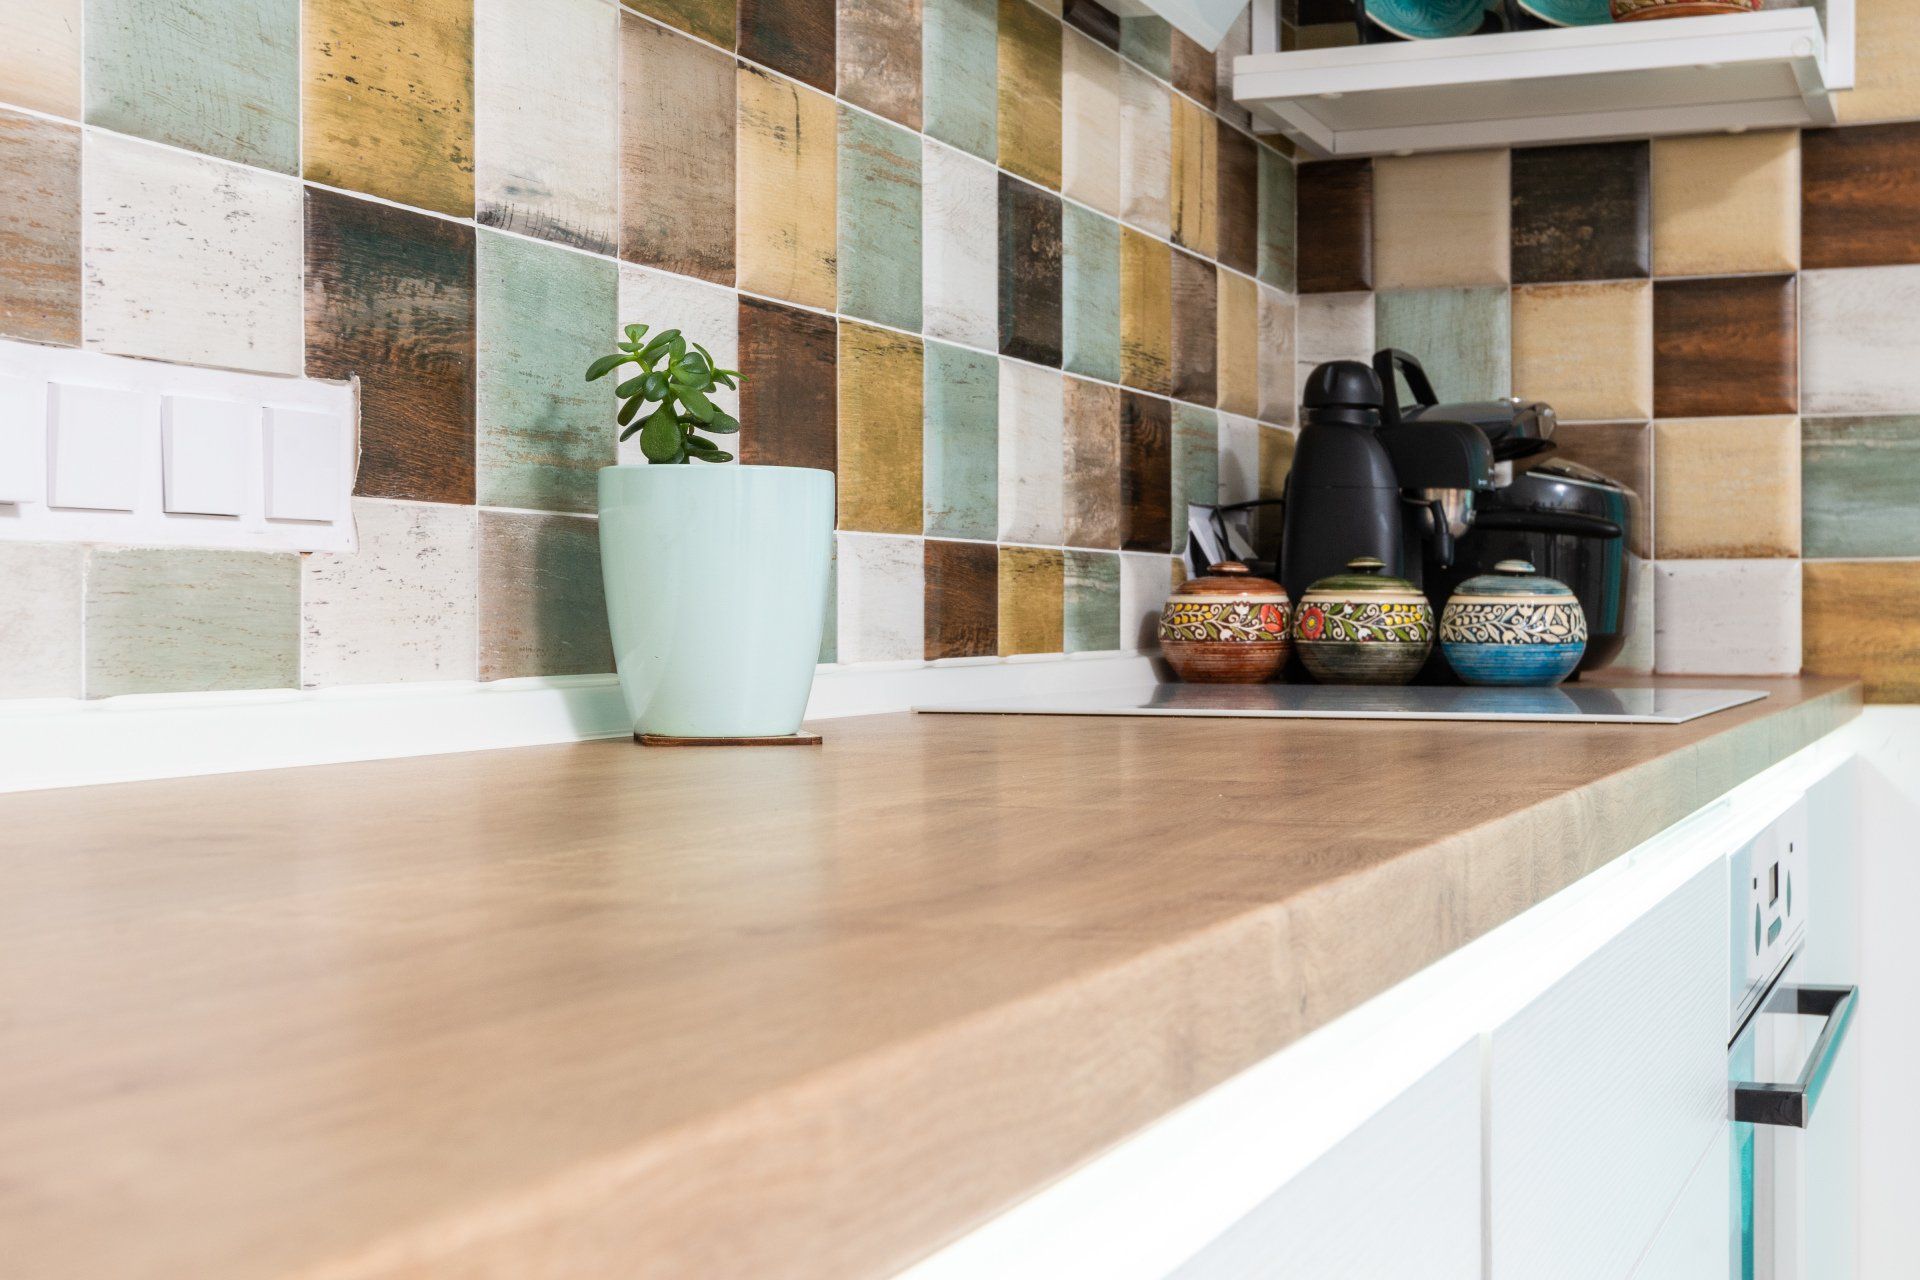 A kitchen with a vibrant, colorful tile backsplash.